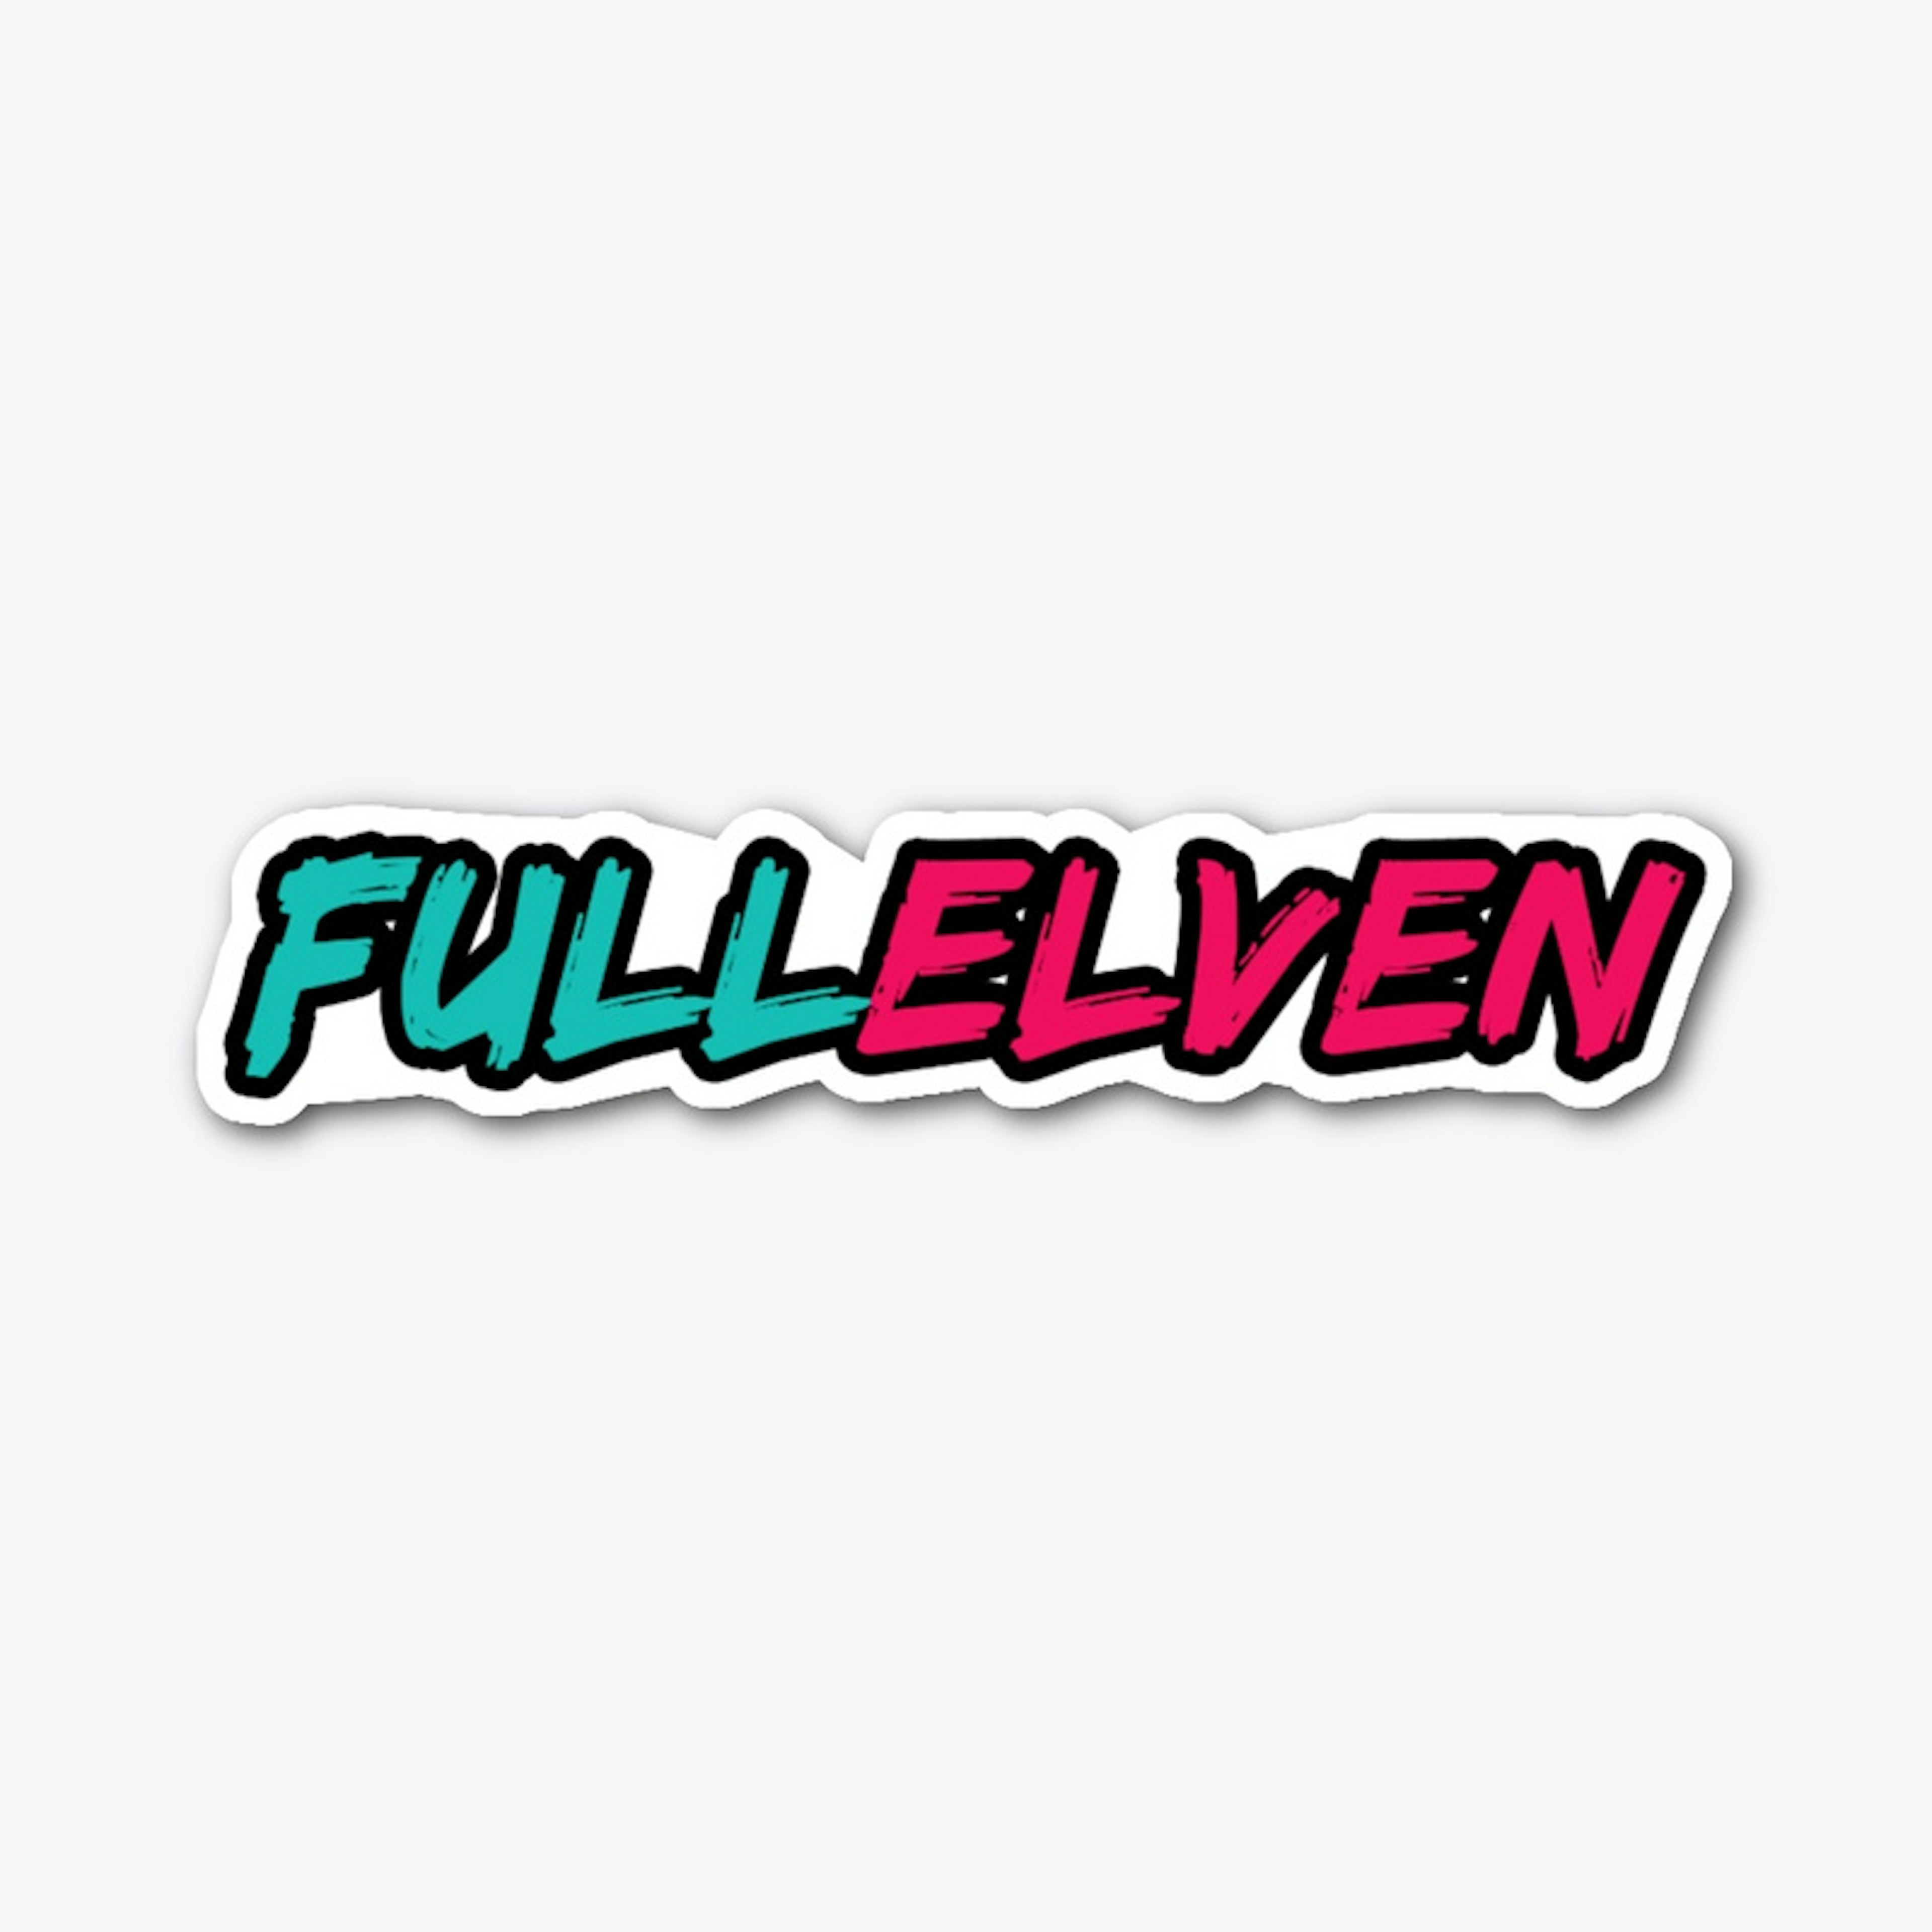 FullElven Graphic Logo